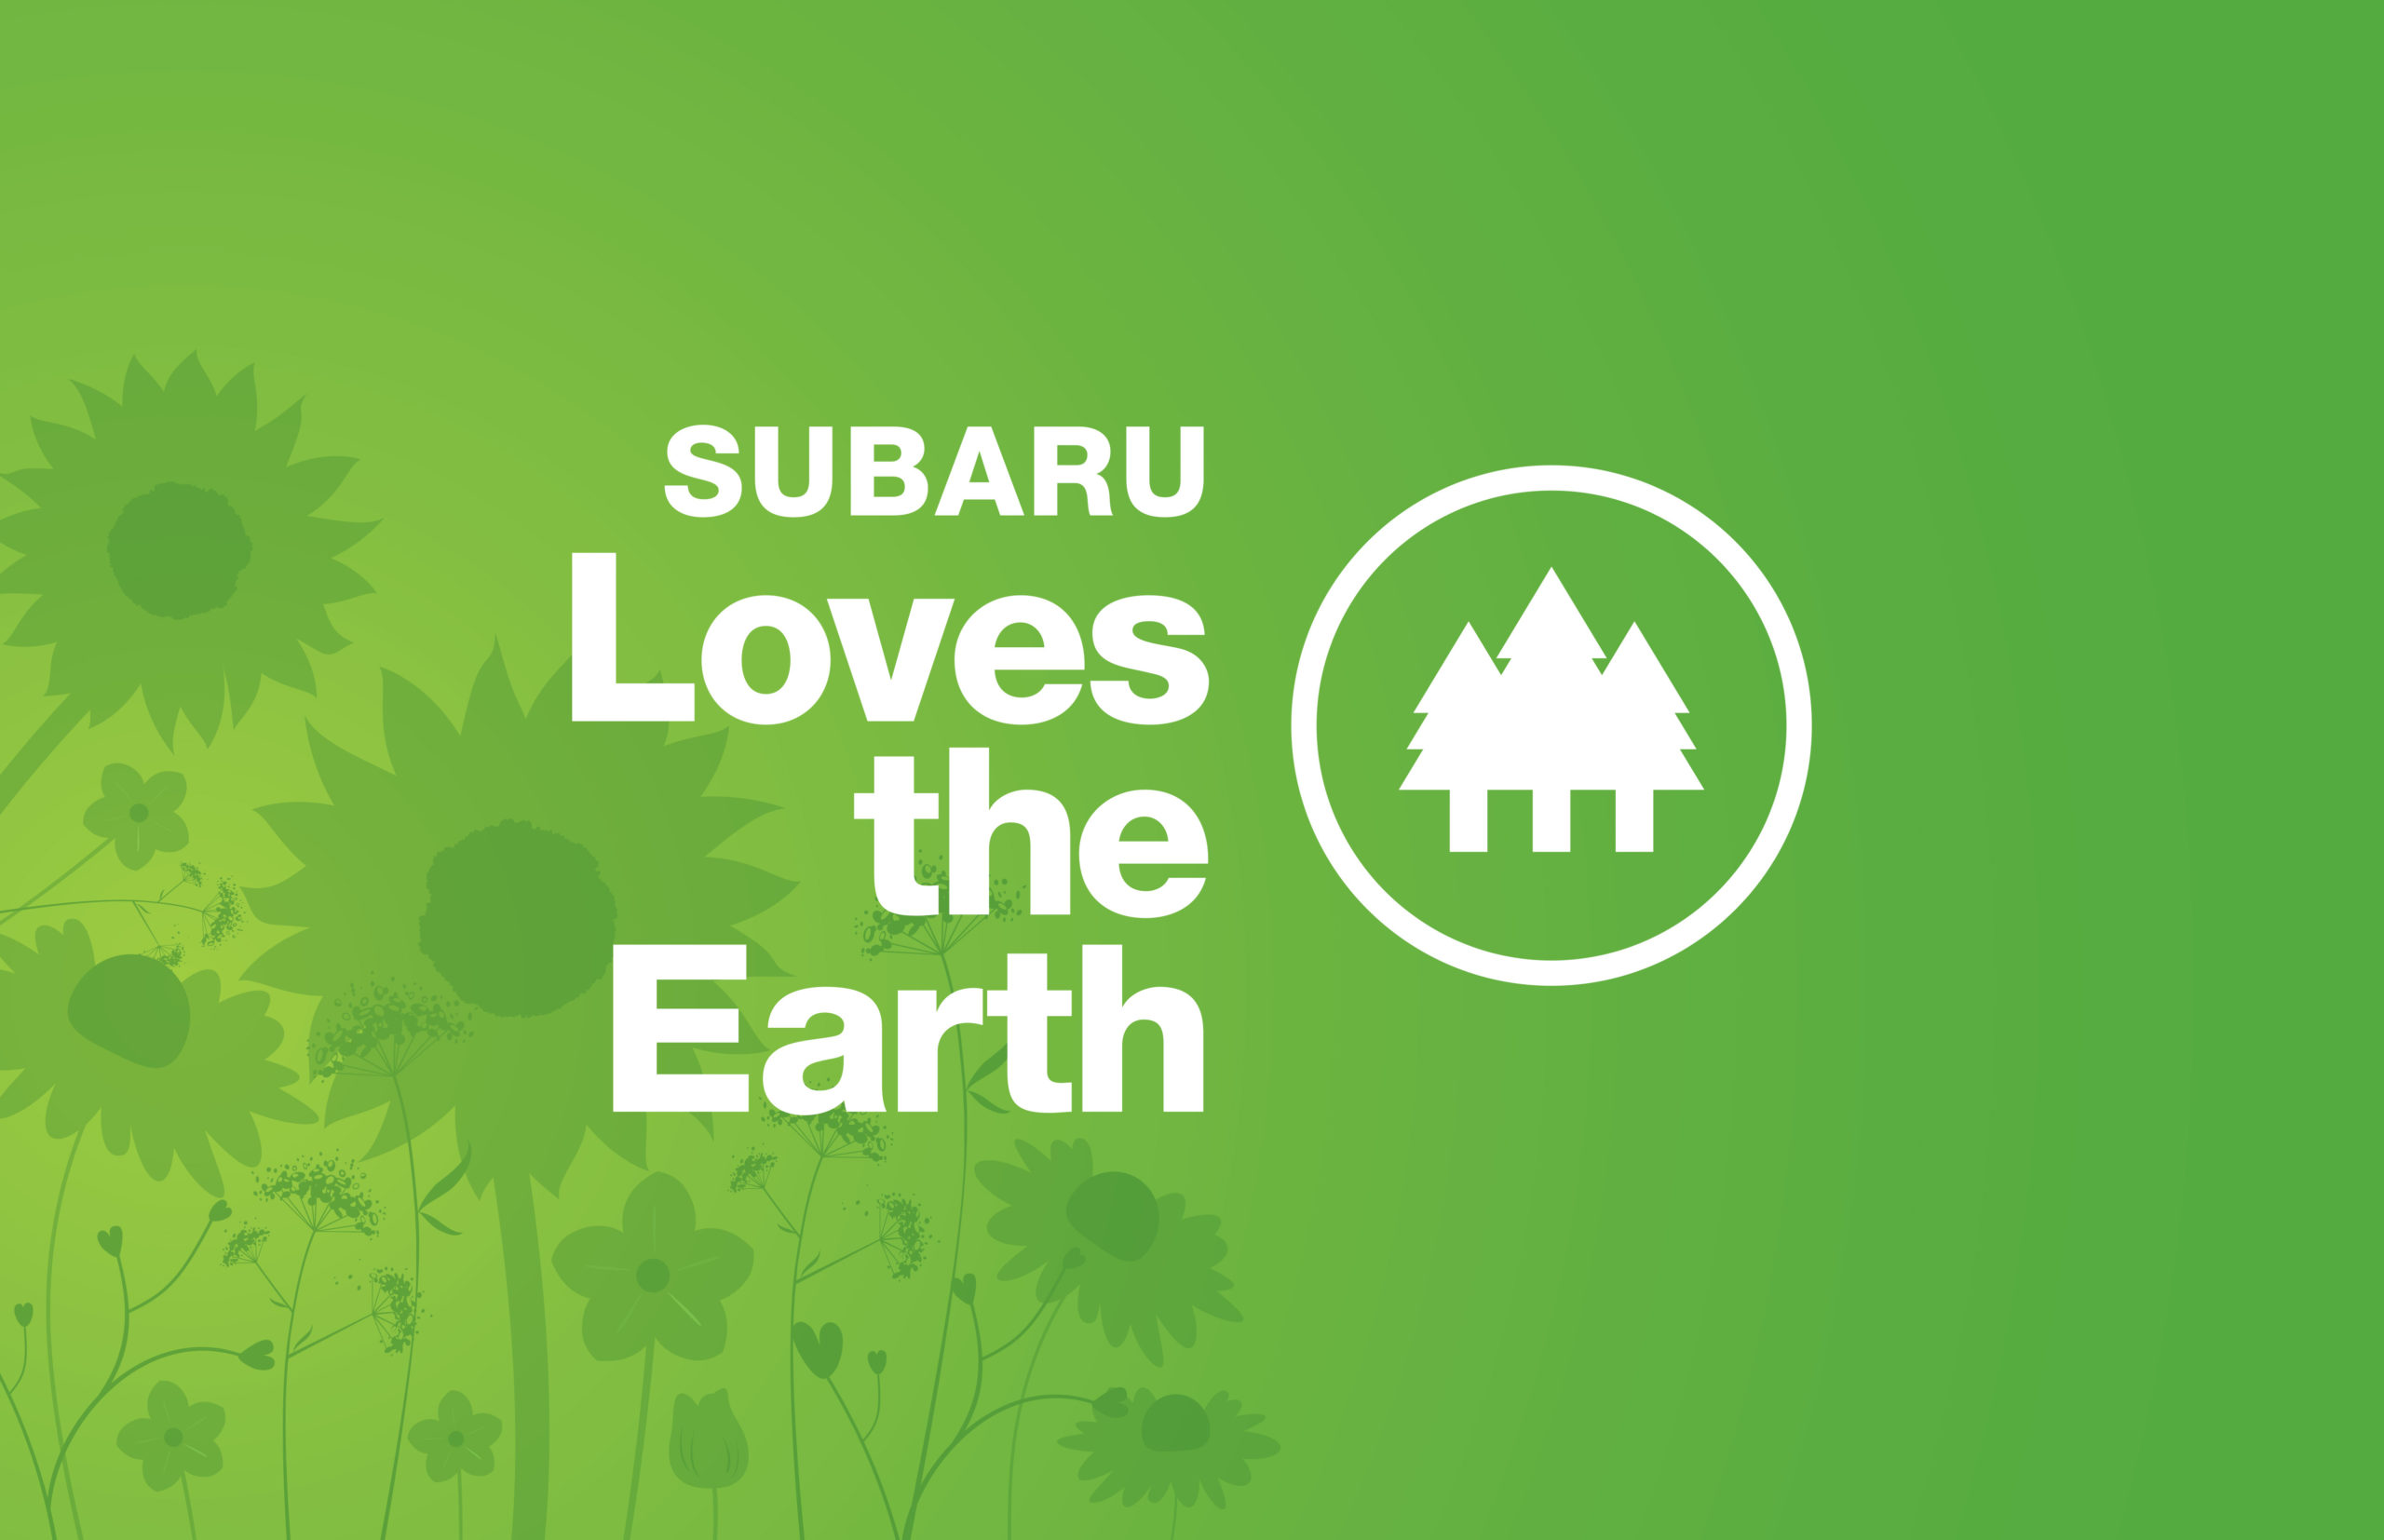 Subaru loves the earth